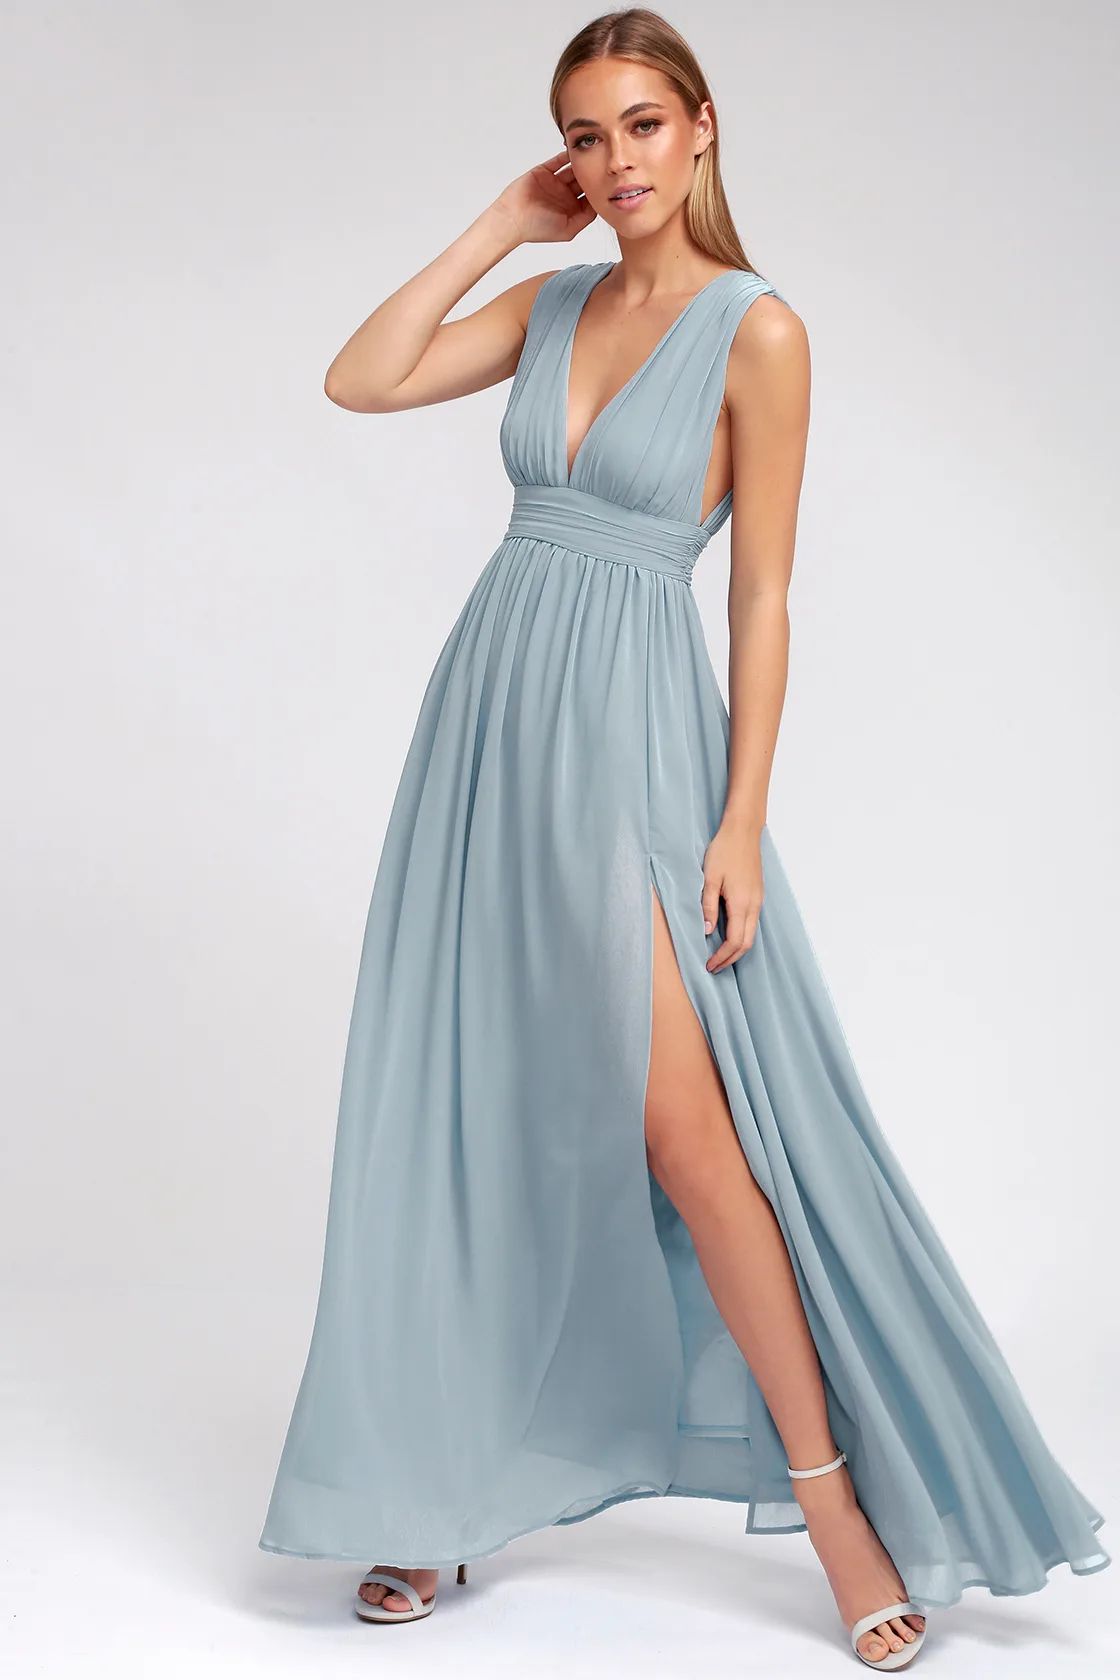 Heavenly Hues Light Blue Maxi Dress | Lulus (US)